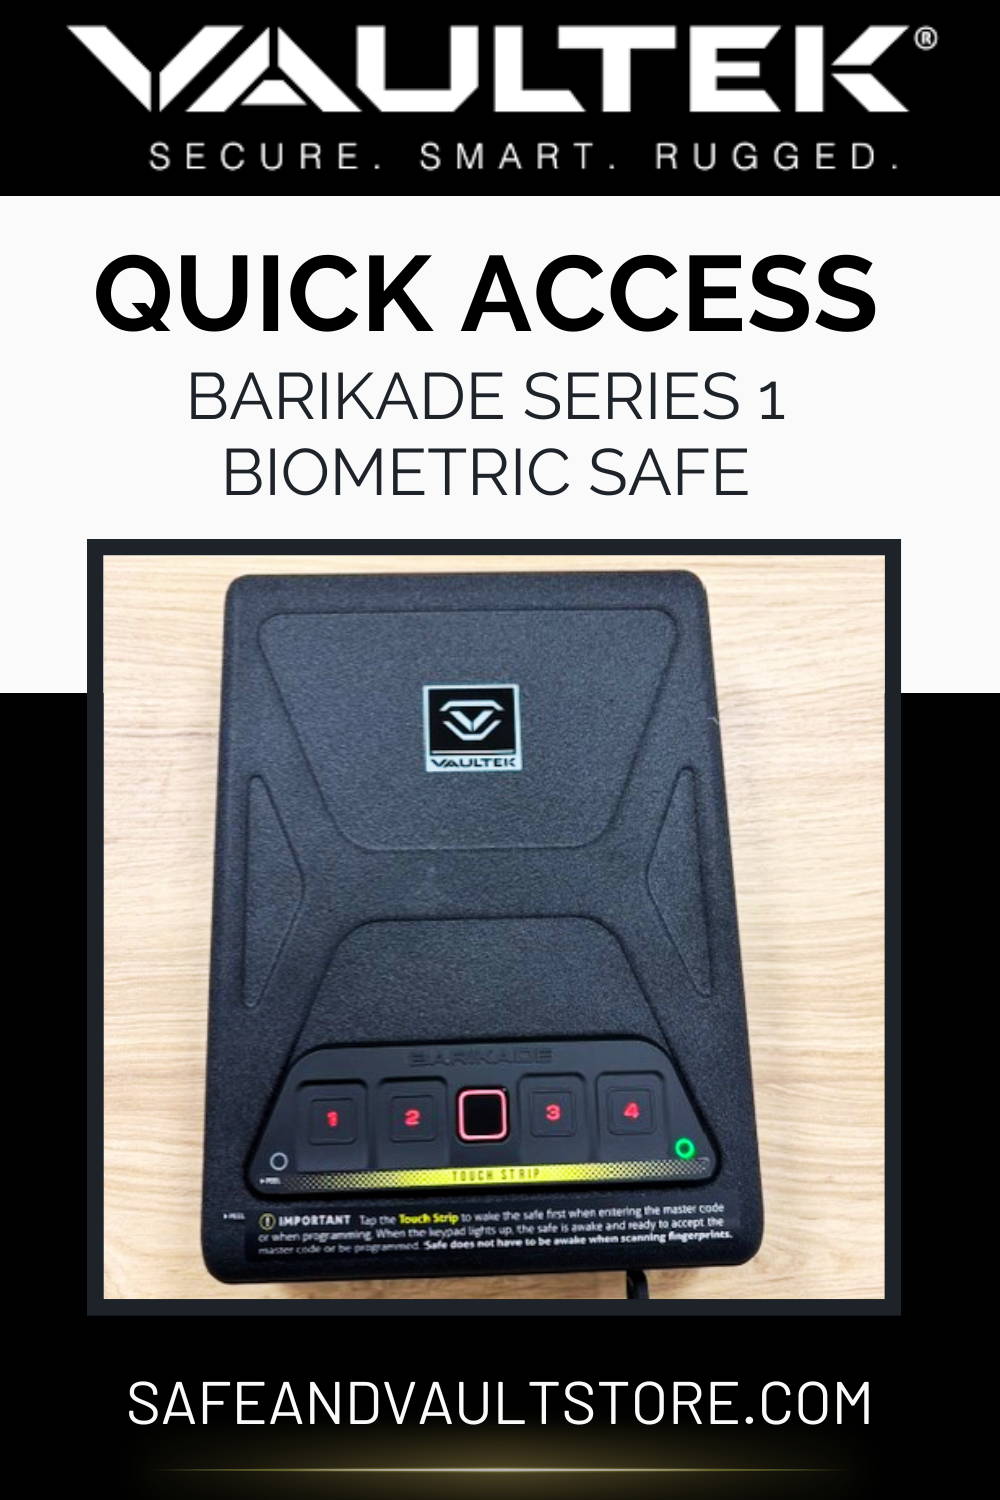 Barikade Series 1 Biometric Safe